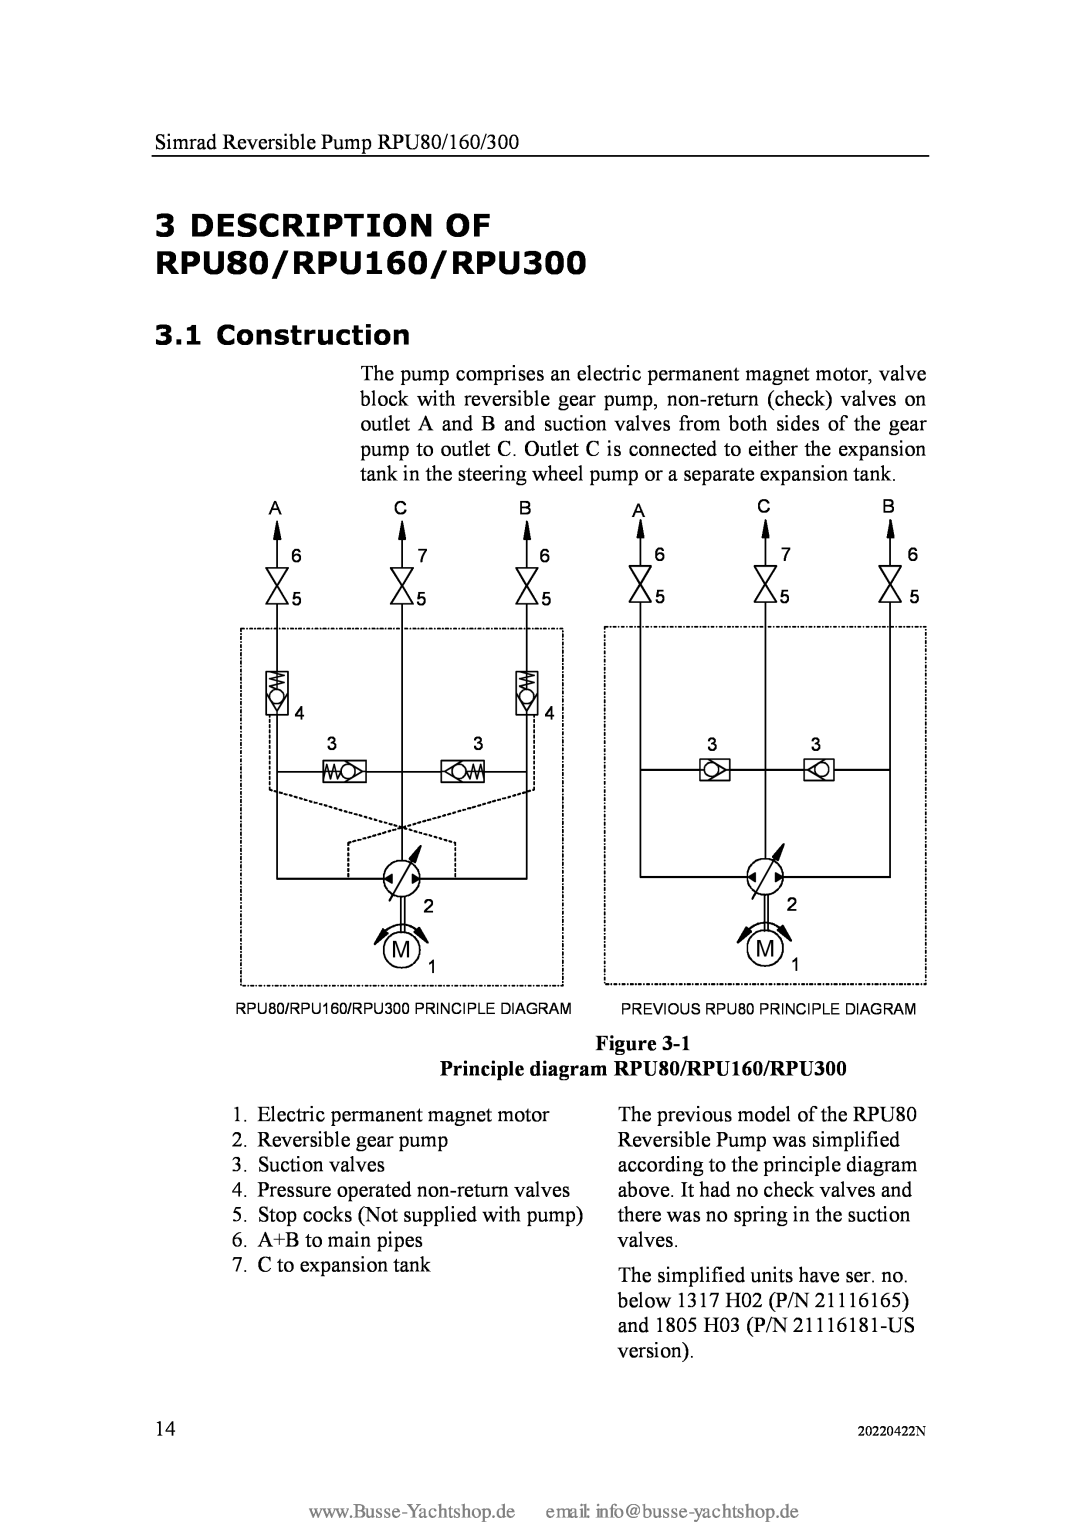 Simran instruction manual DESCRIPTION OF RPU80/RPU160/RPU300, Construction 